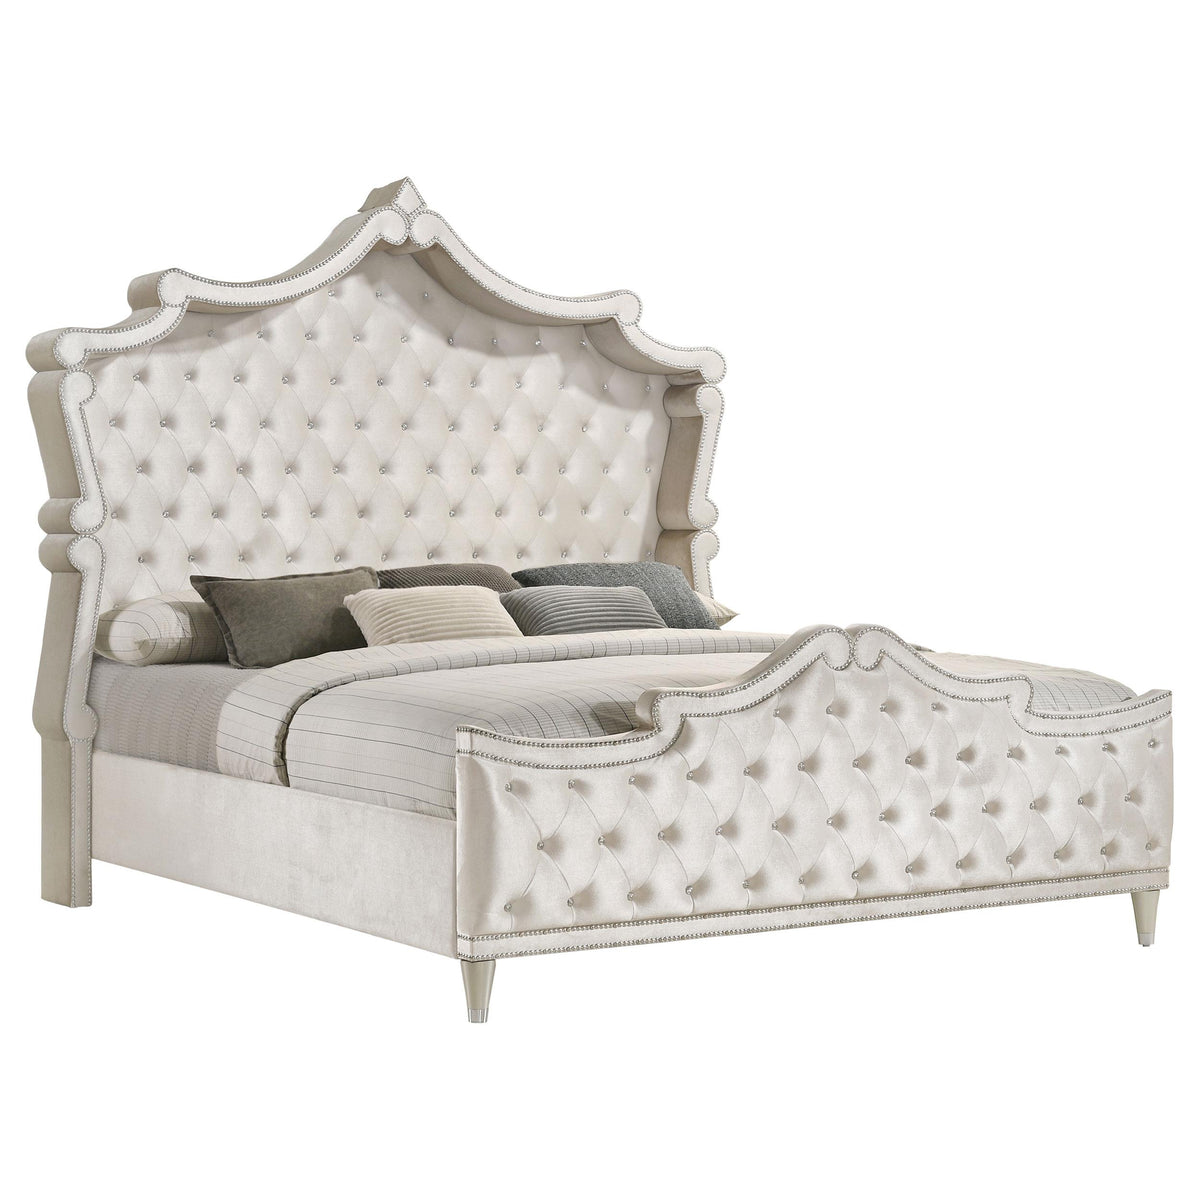 Antonella Upholstered Tufted Eastern King Bed Ivory and Camel  Half Price Furniture